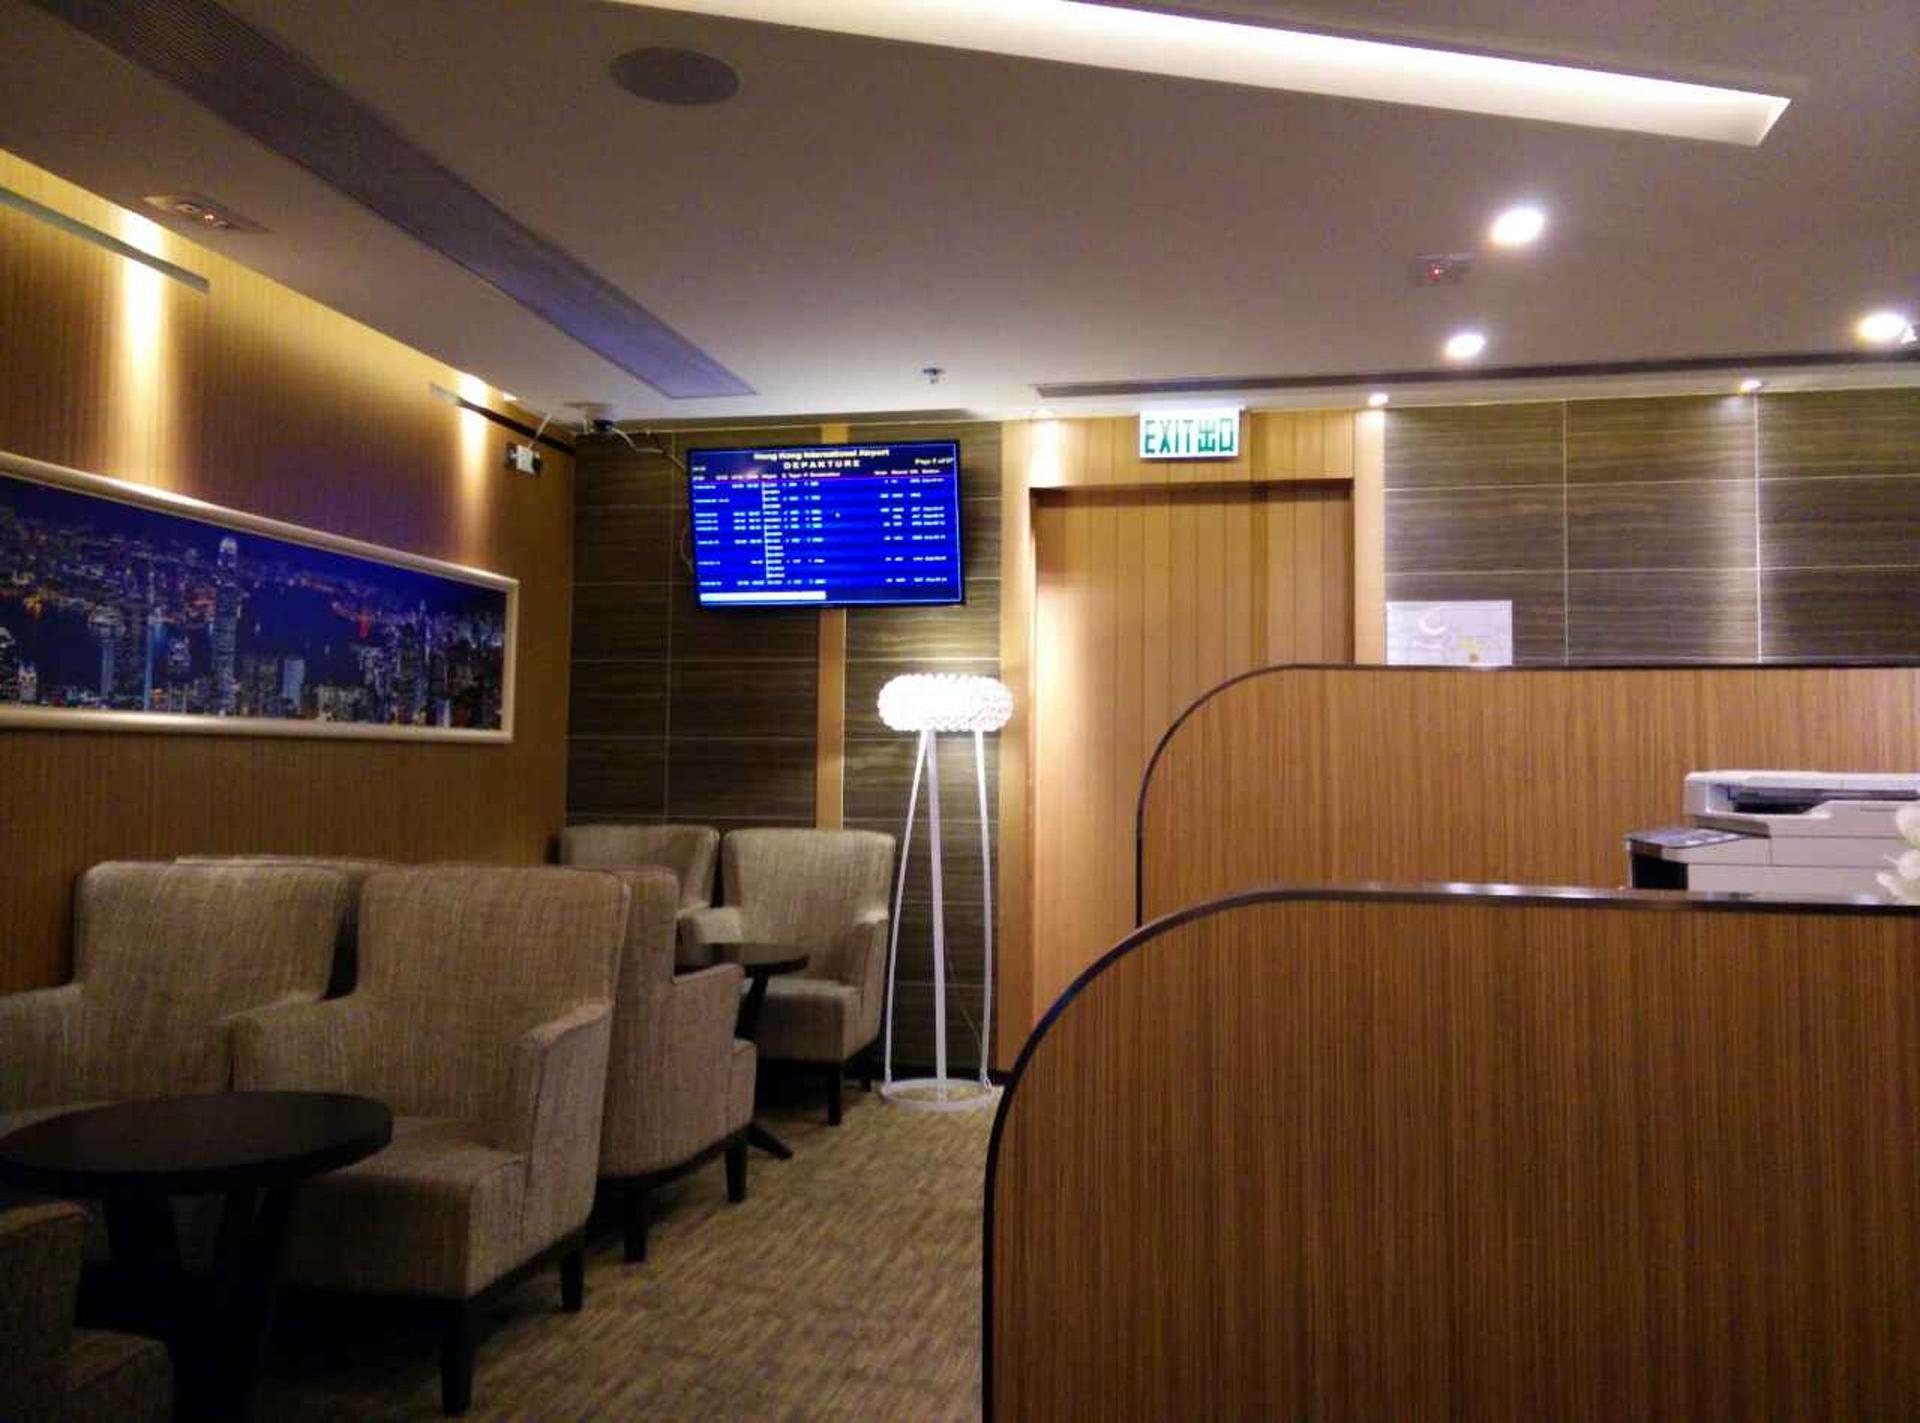 Hong Kong Airlines VIP Lounge (Club Bauhinia) image 7 of 40